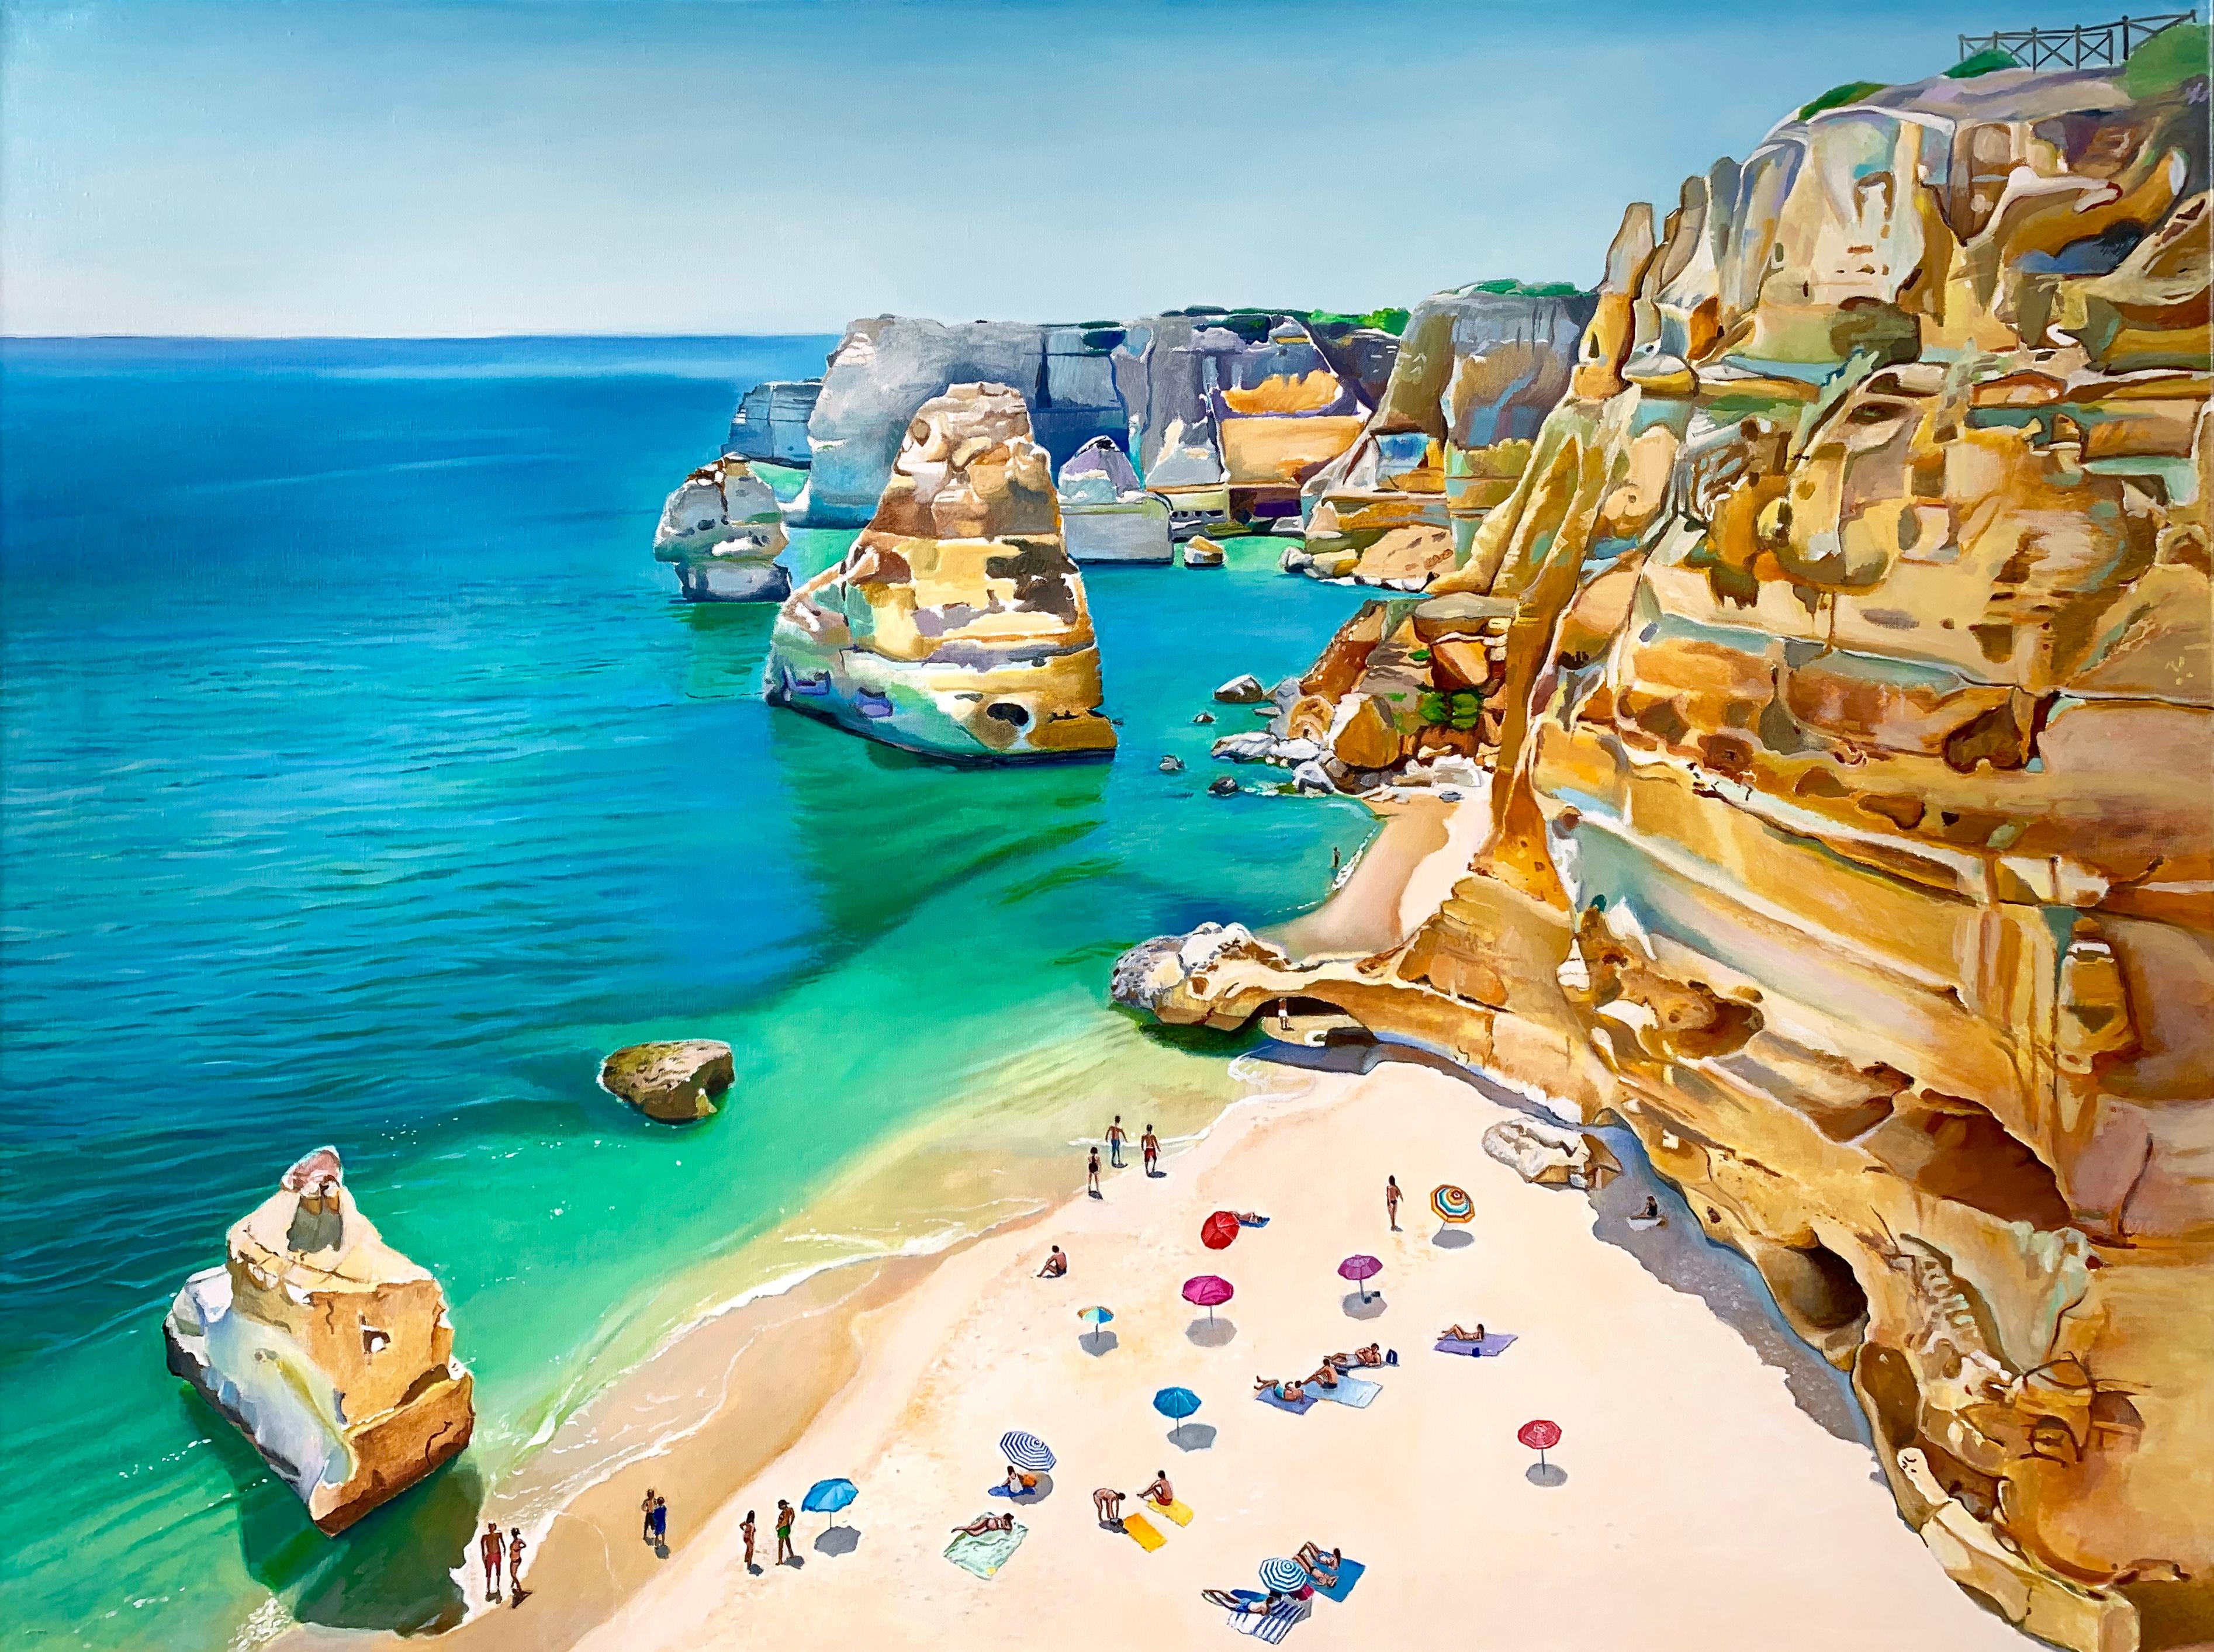 Megan Eisenberg Landscape Painting - "Sunbathers at Portugal Cliffs" Original Oil Painting 30 in x 40 in